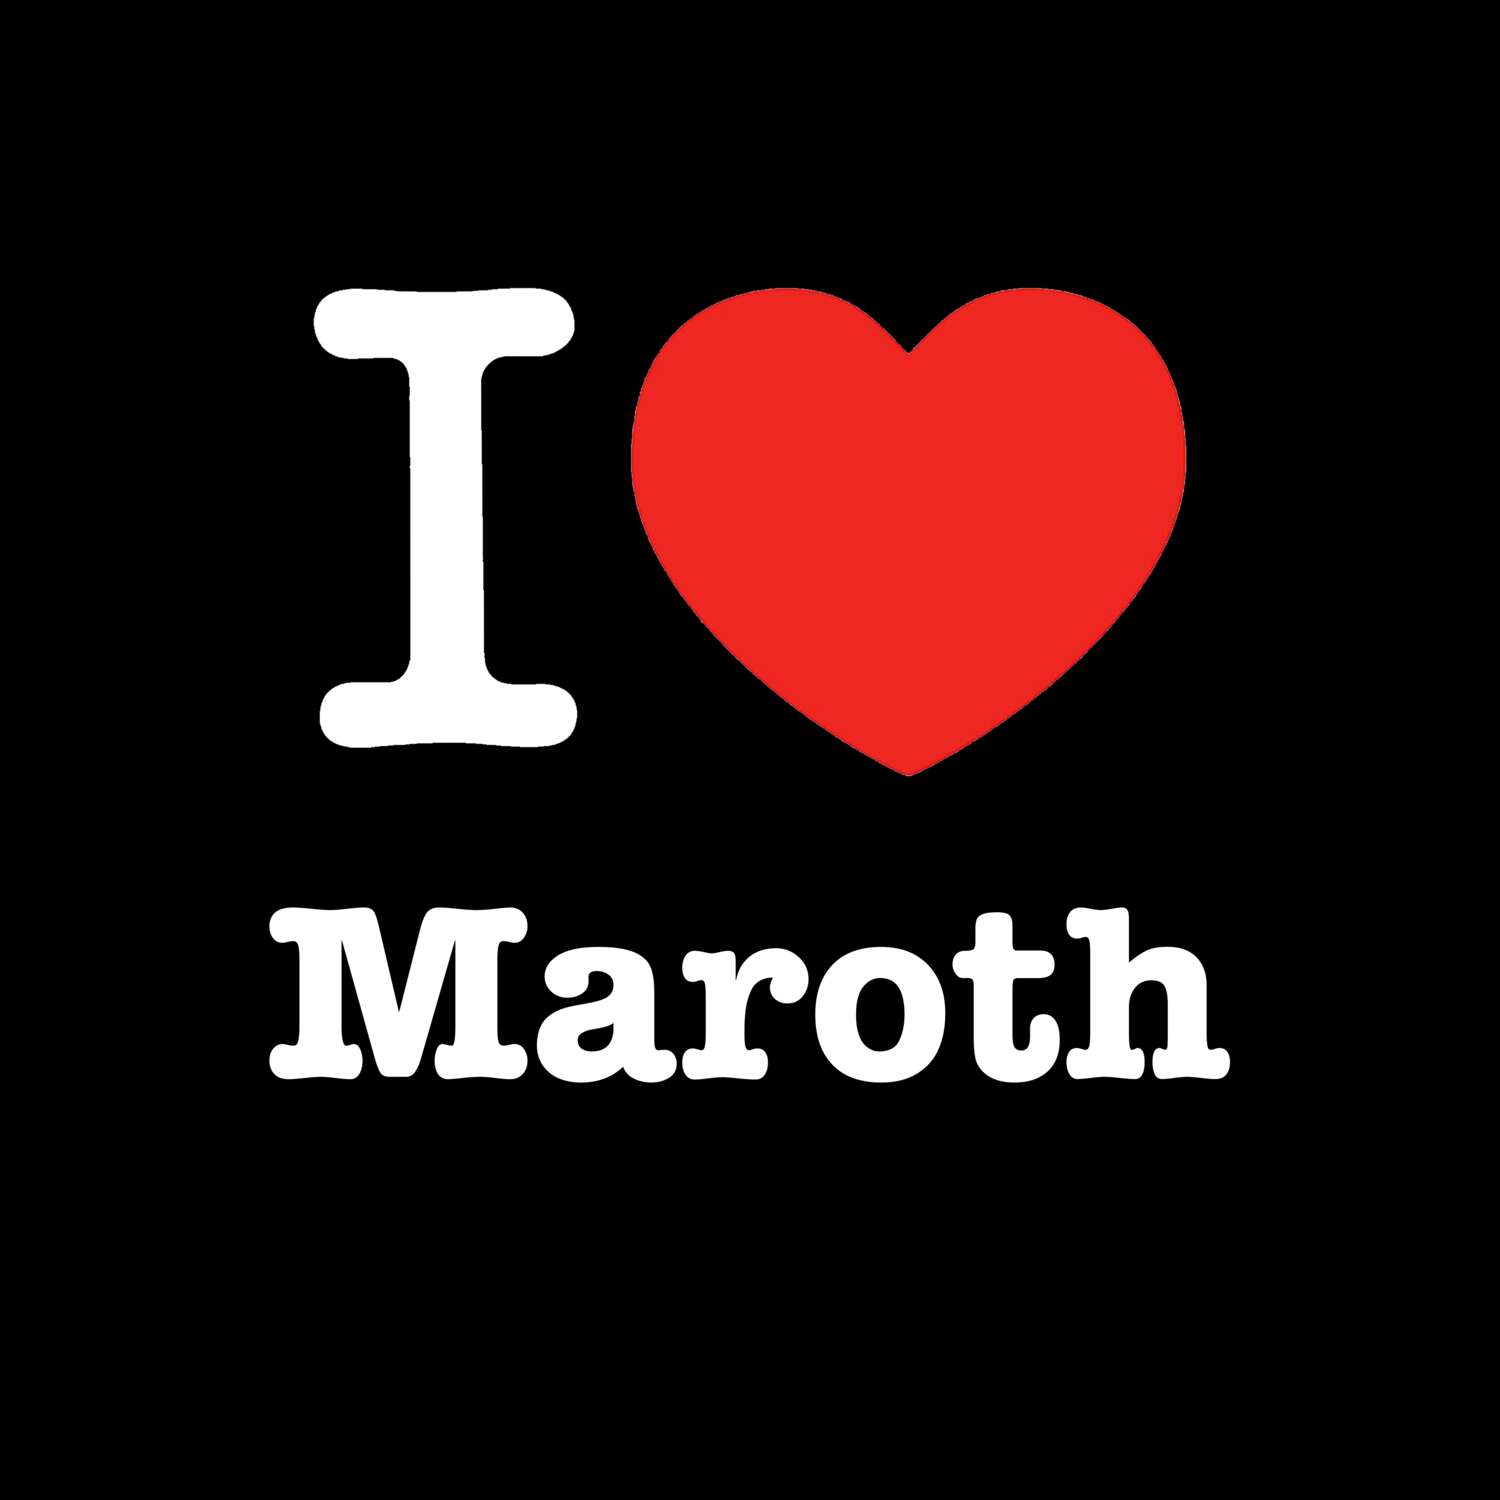 Maroth T-Shirt »I love«